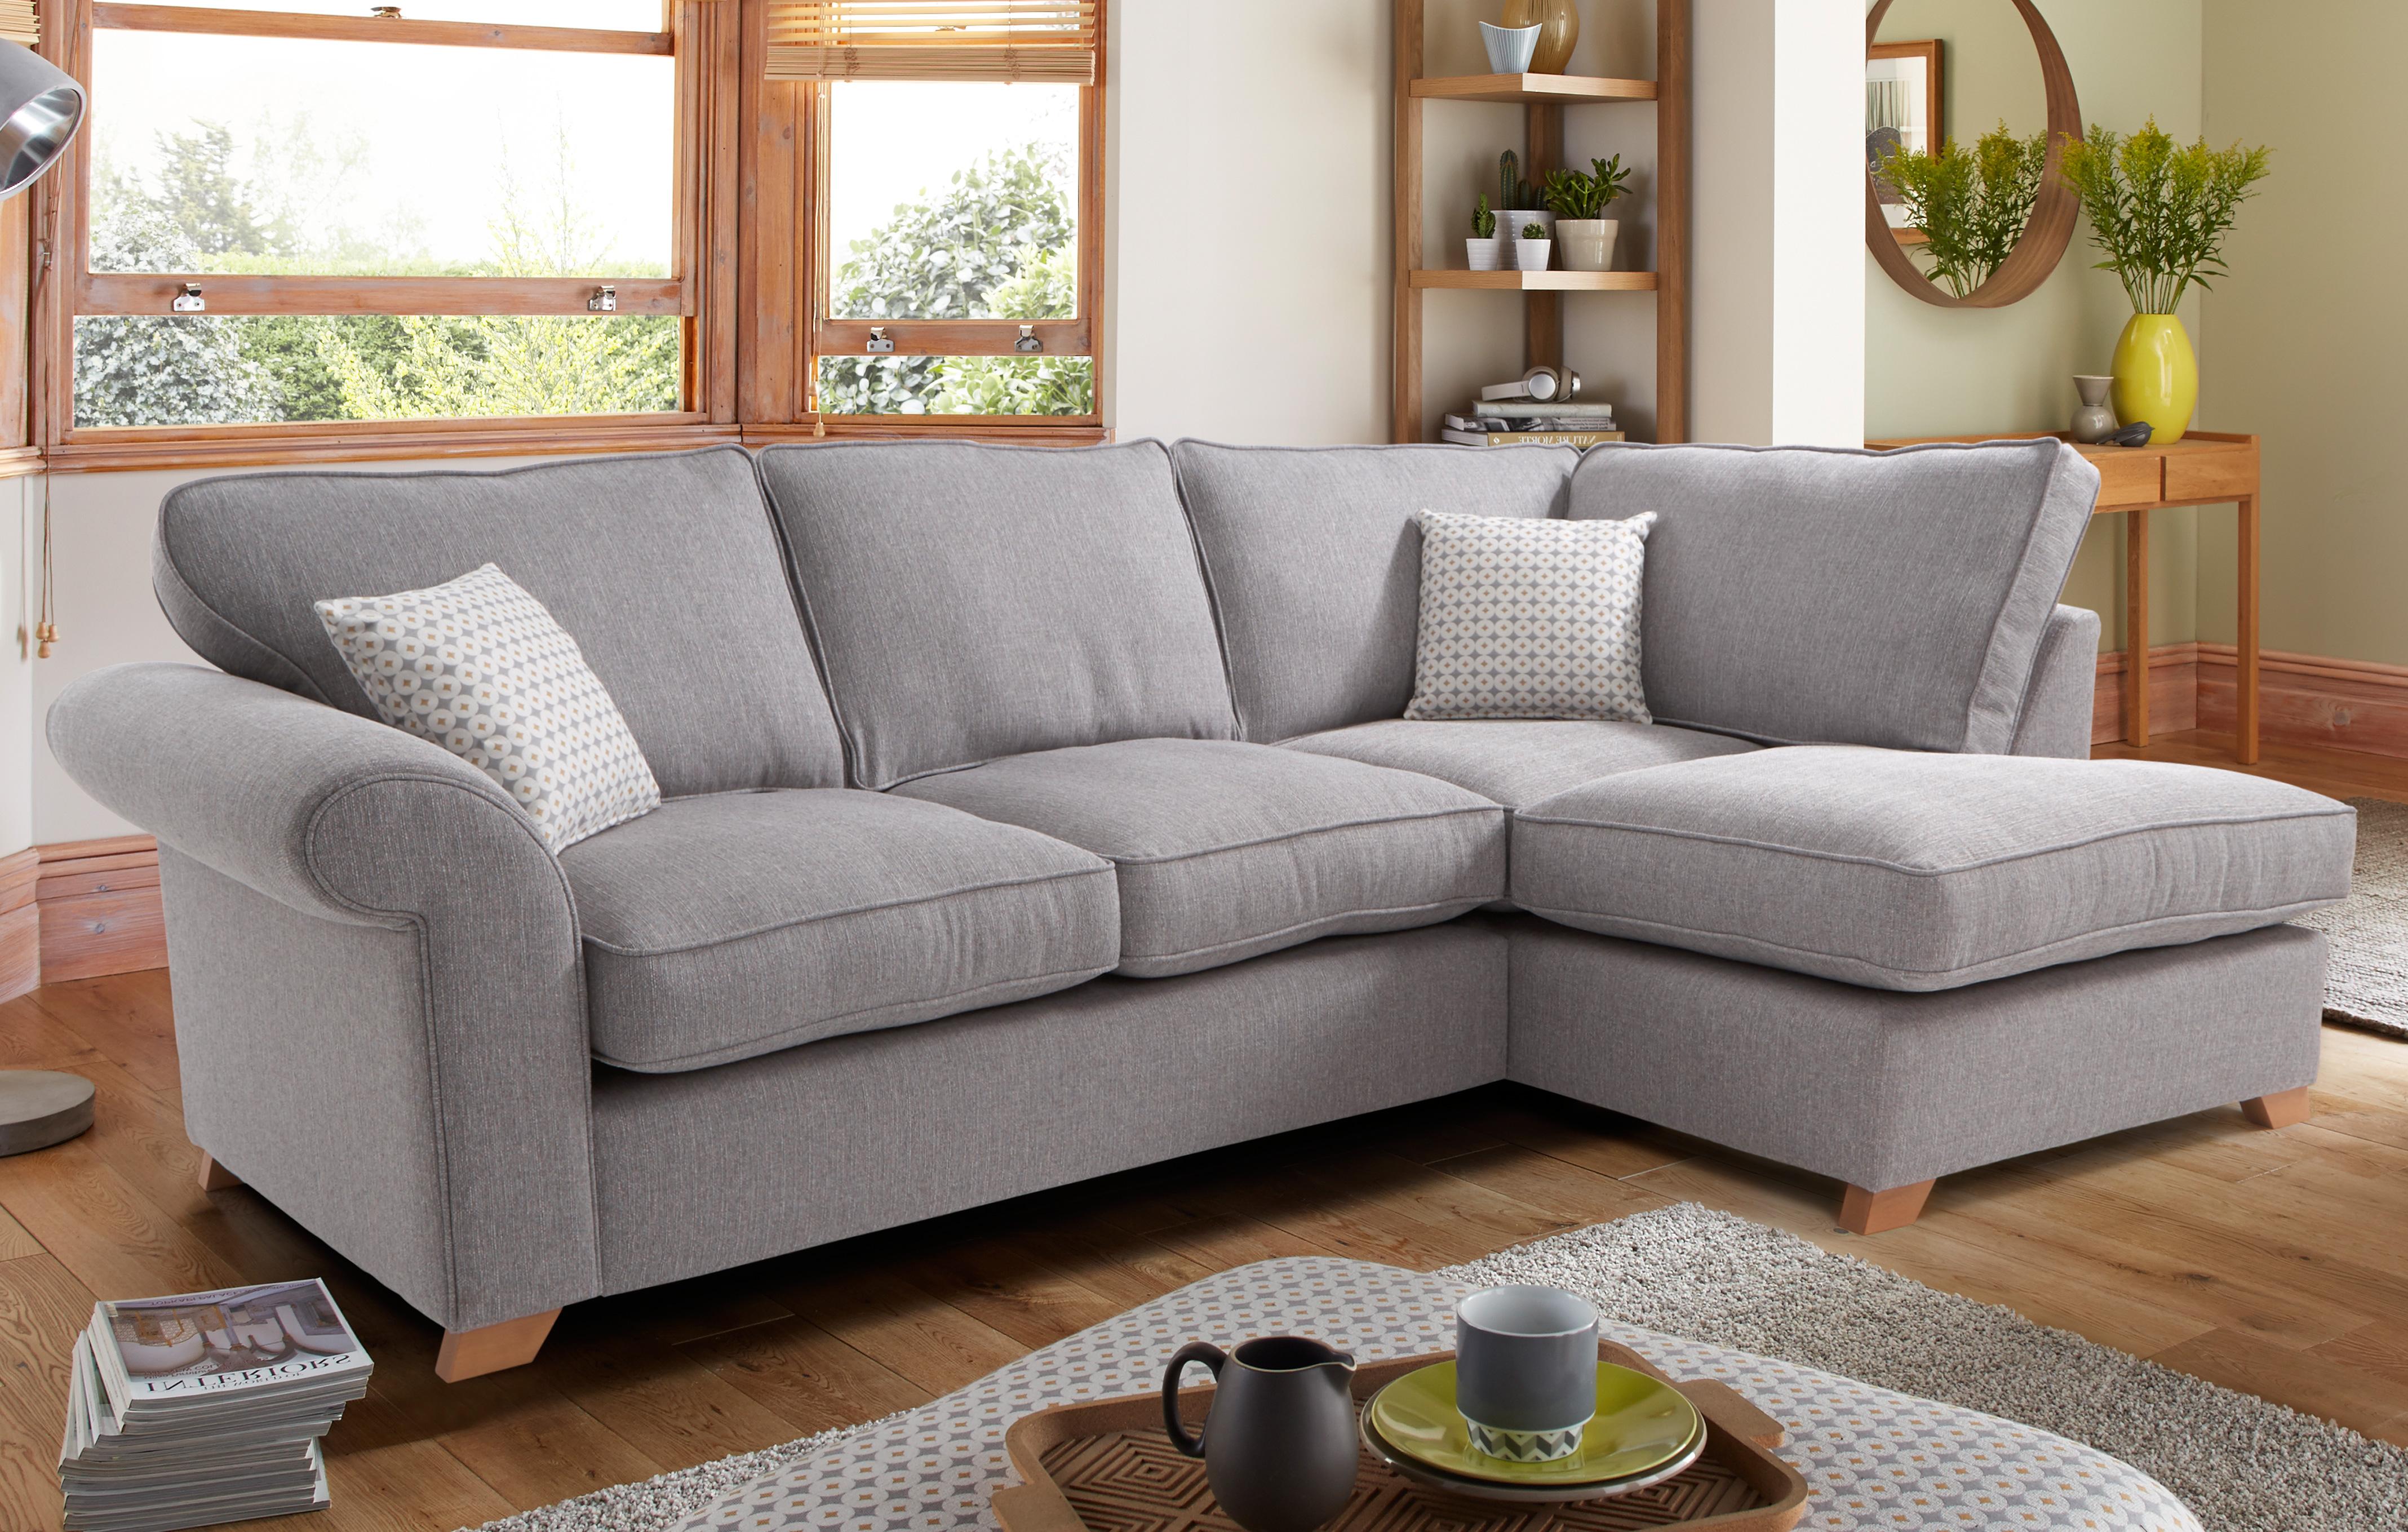 good quality corner sofa beds